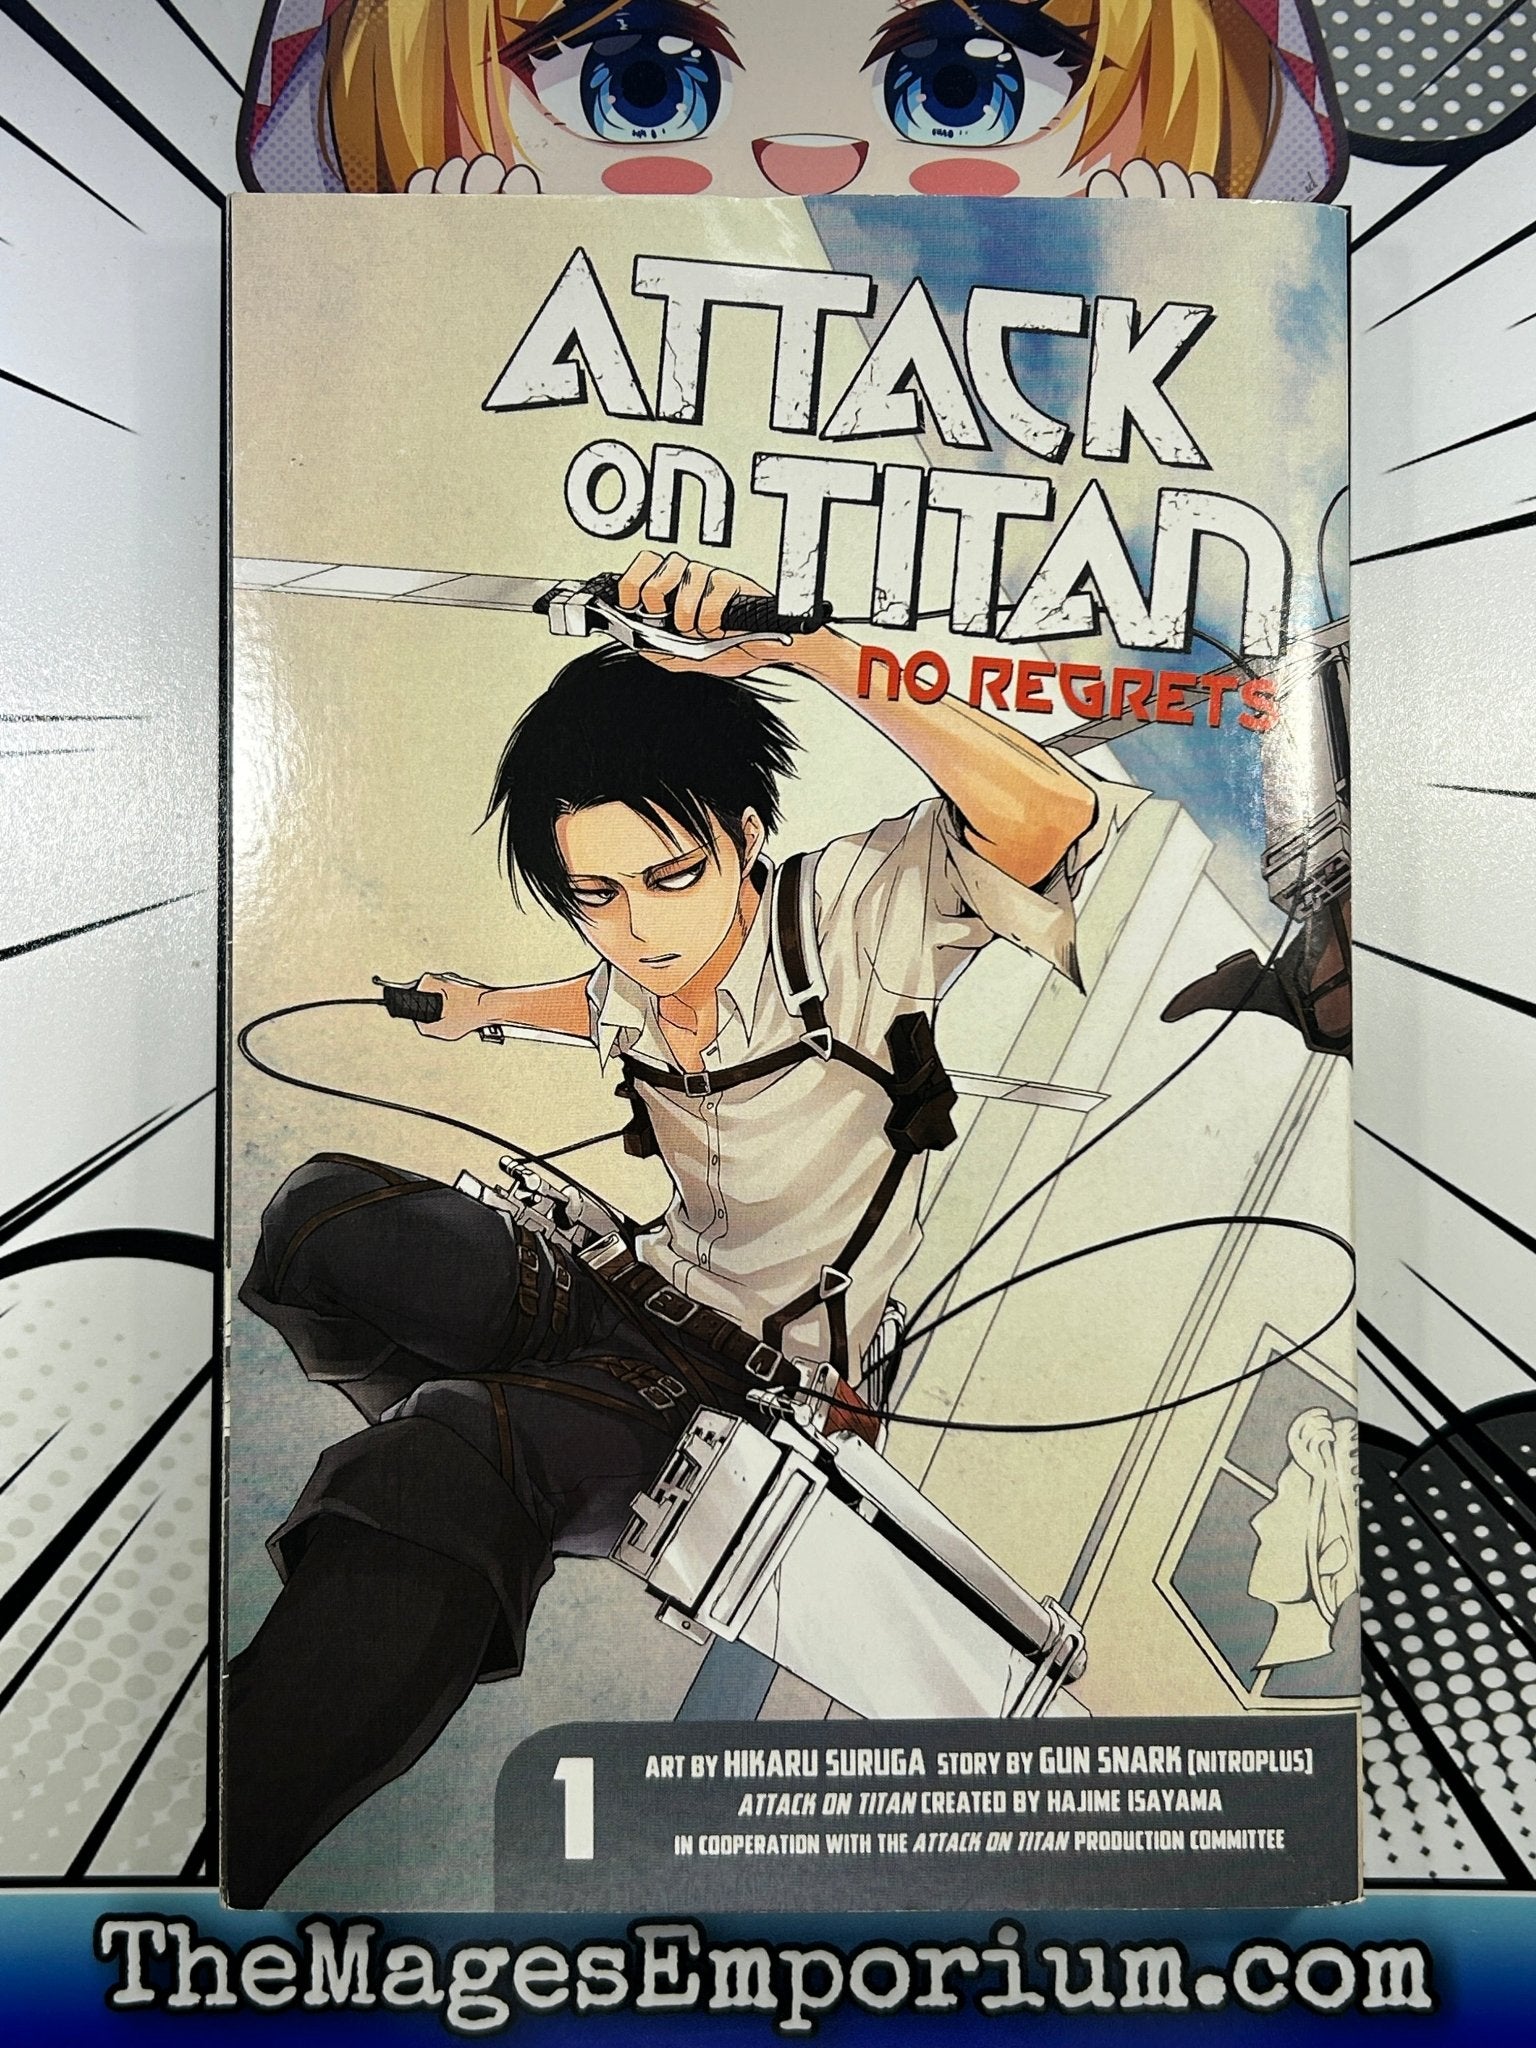 Kodansha Releases Human-Sized 'Attack on Titan' Manga for Titans